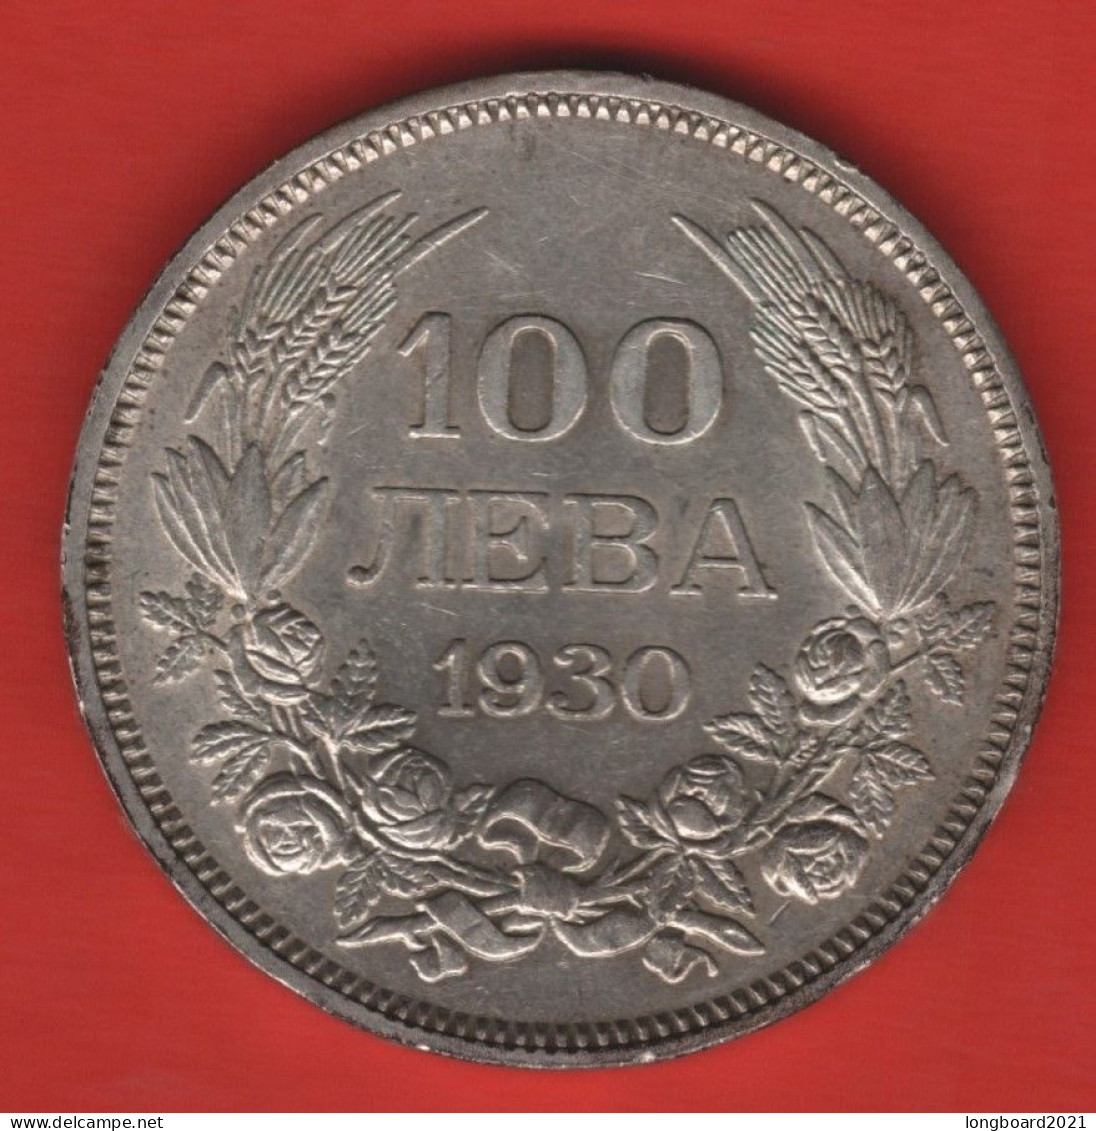 BULGARIA - 100 LEW 1930 -SILVER- - Bulgarie